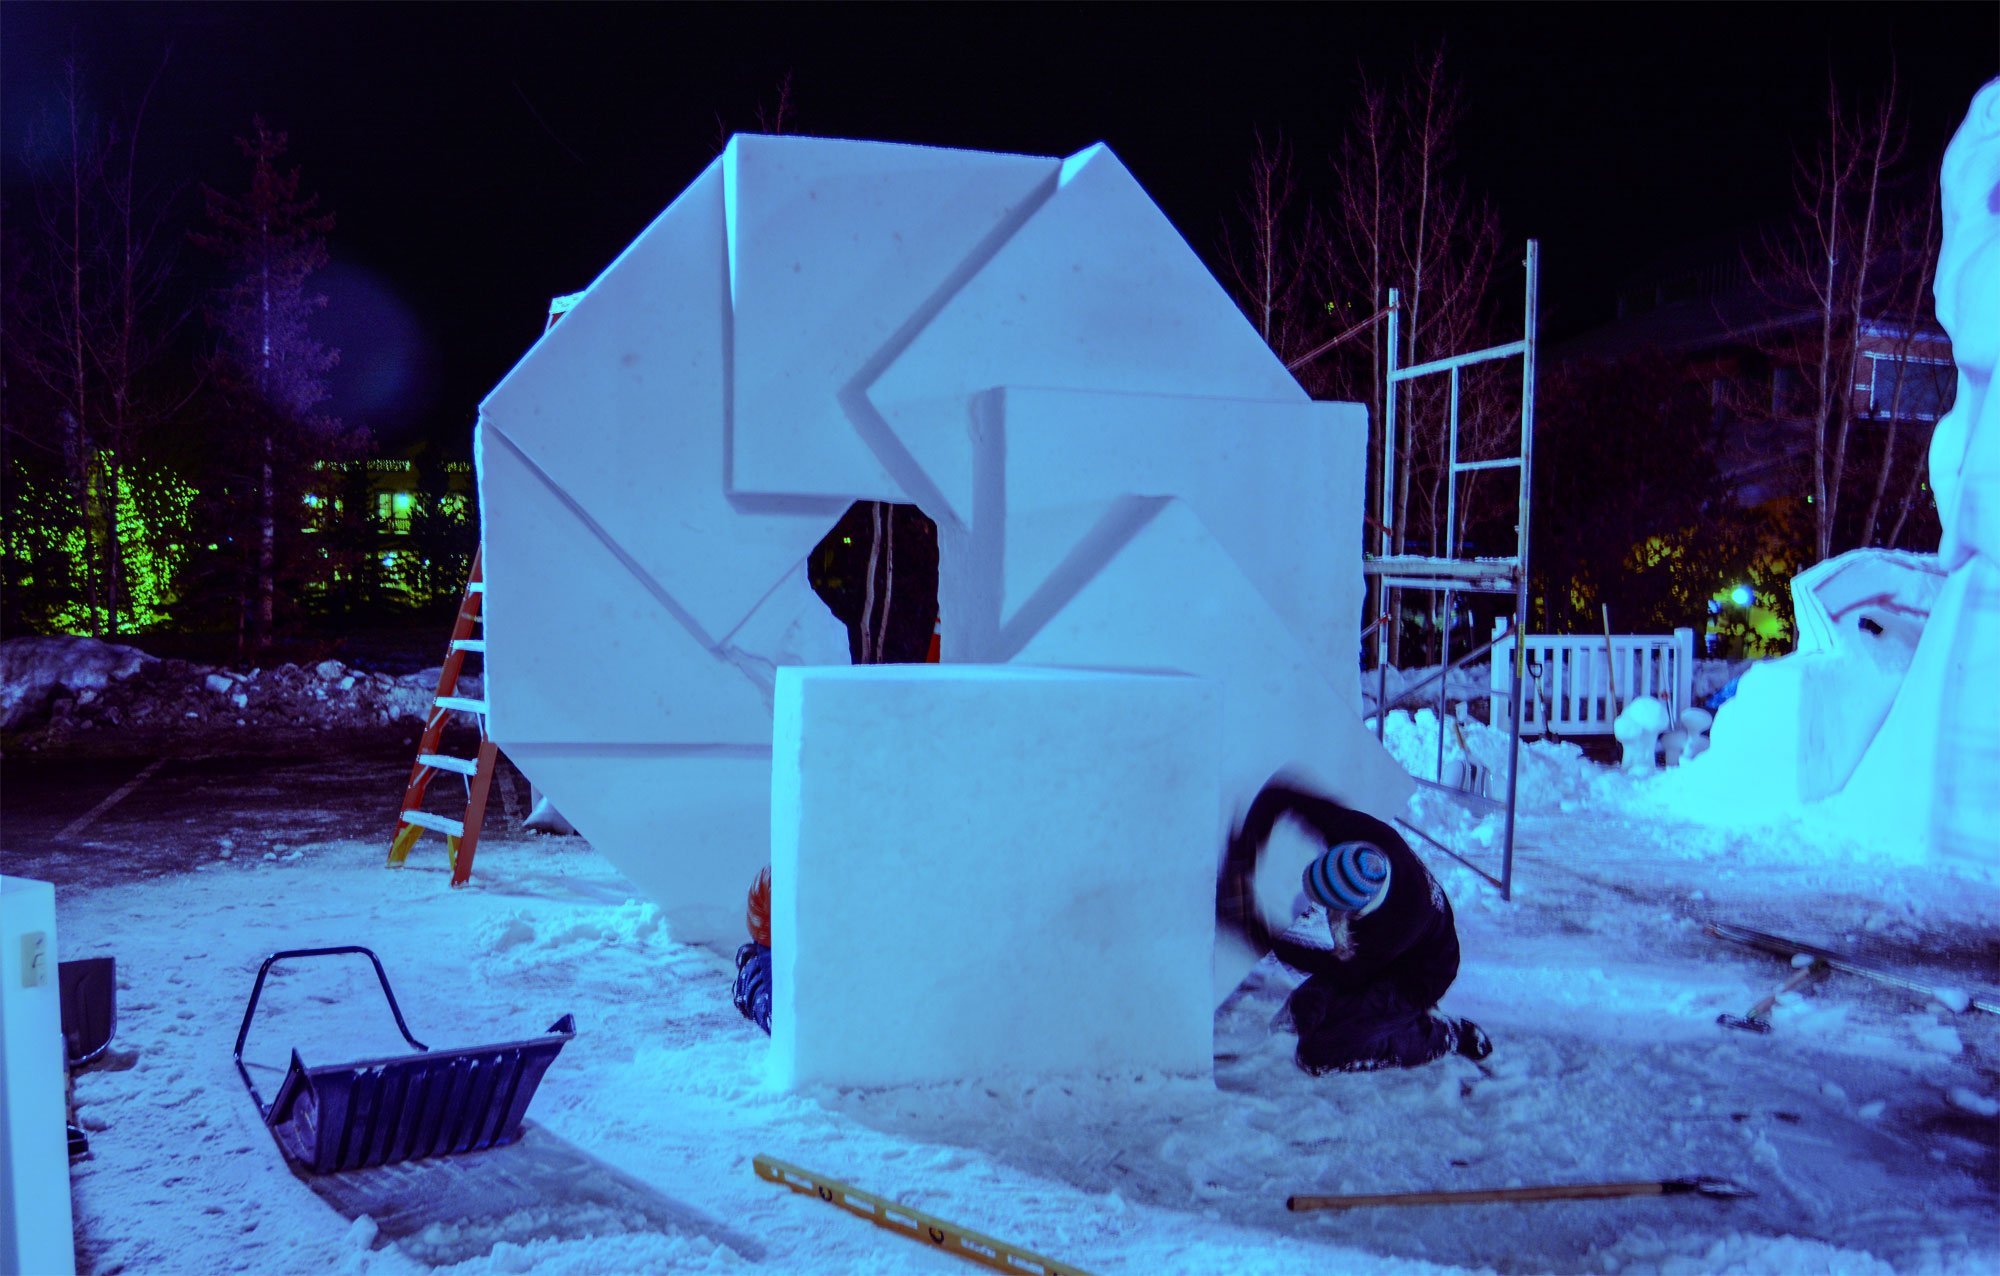 Snow Sculpture clean cubes from Breckenridge International Snow Sculpture Championships 2015